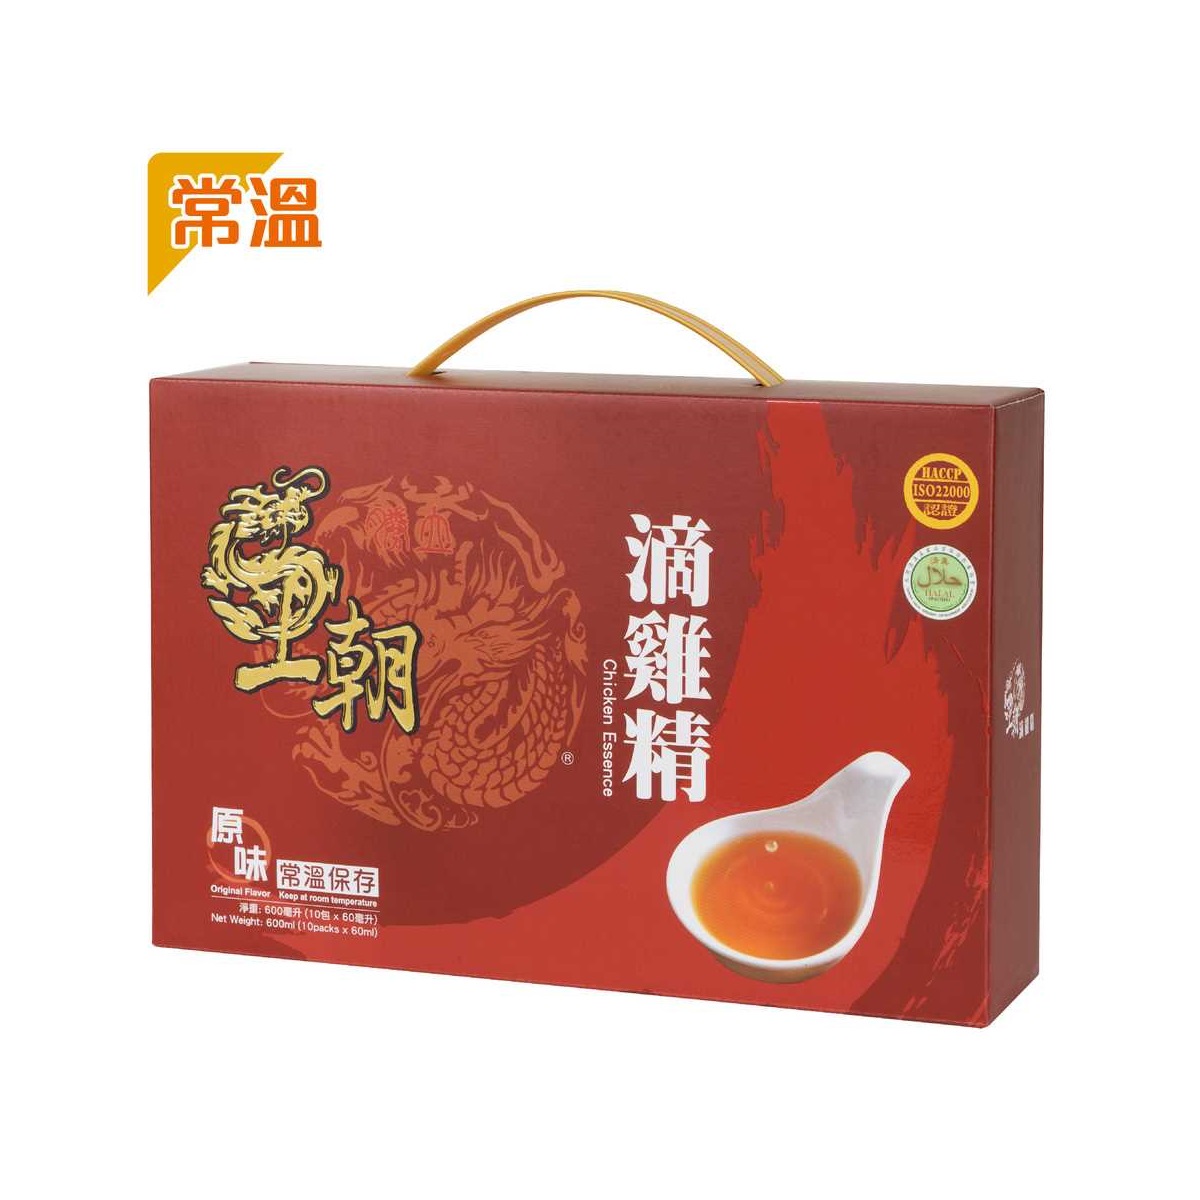 Wang Chao Chicken Essence (Original Flavor) (Ambient - 10 Packs) Bundle of 2